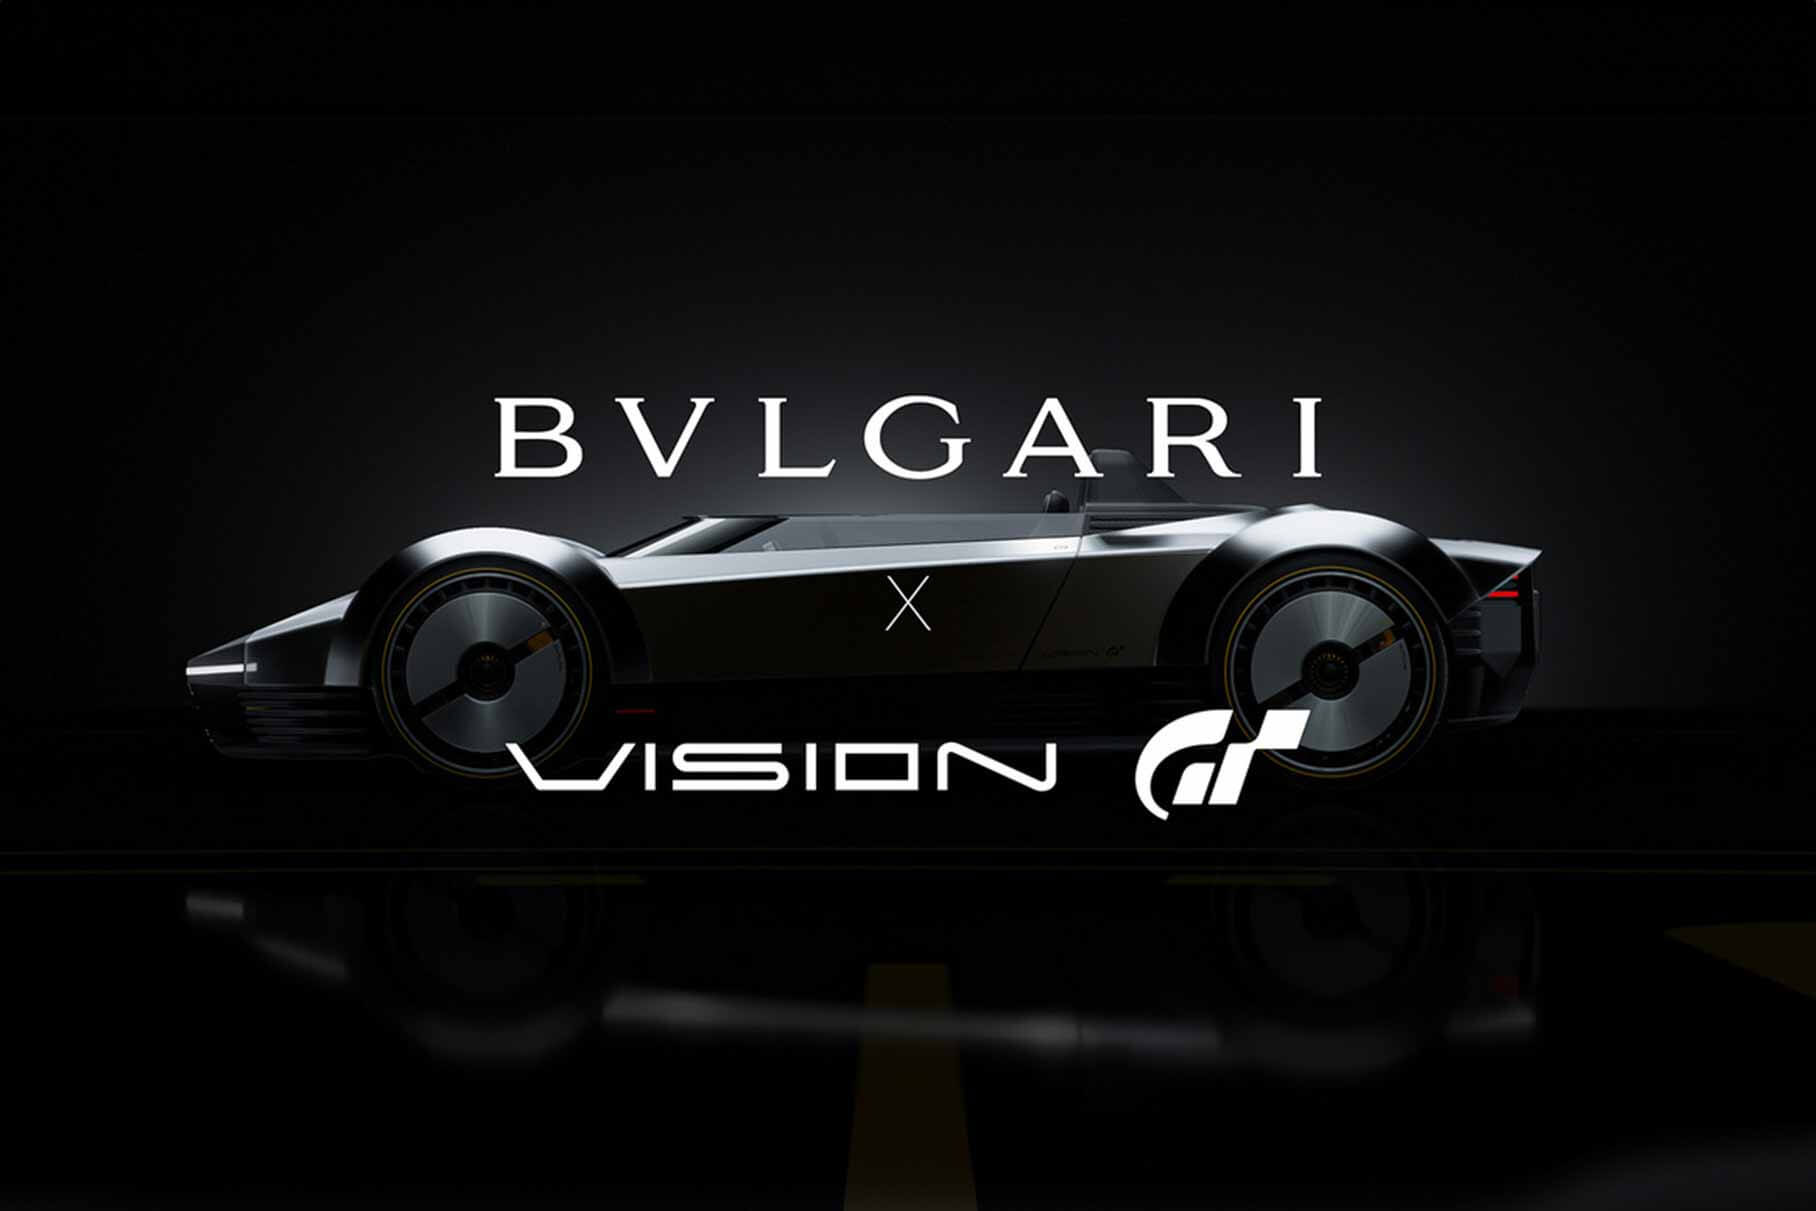 Bulgari showed a virtual supercar for the game Gran Turismo